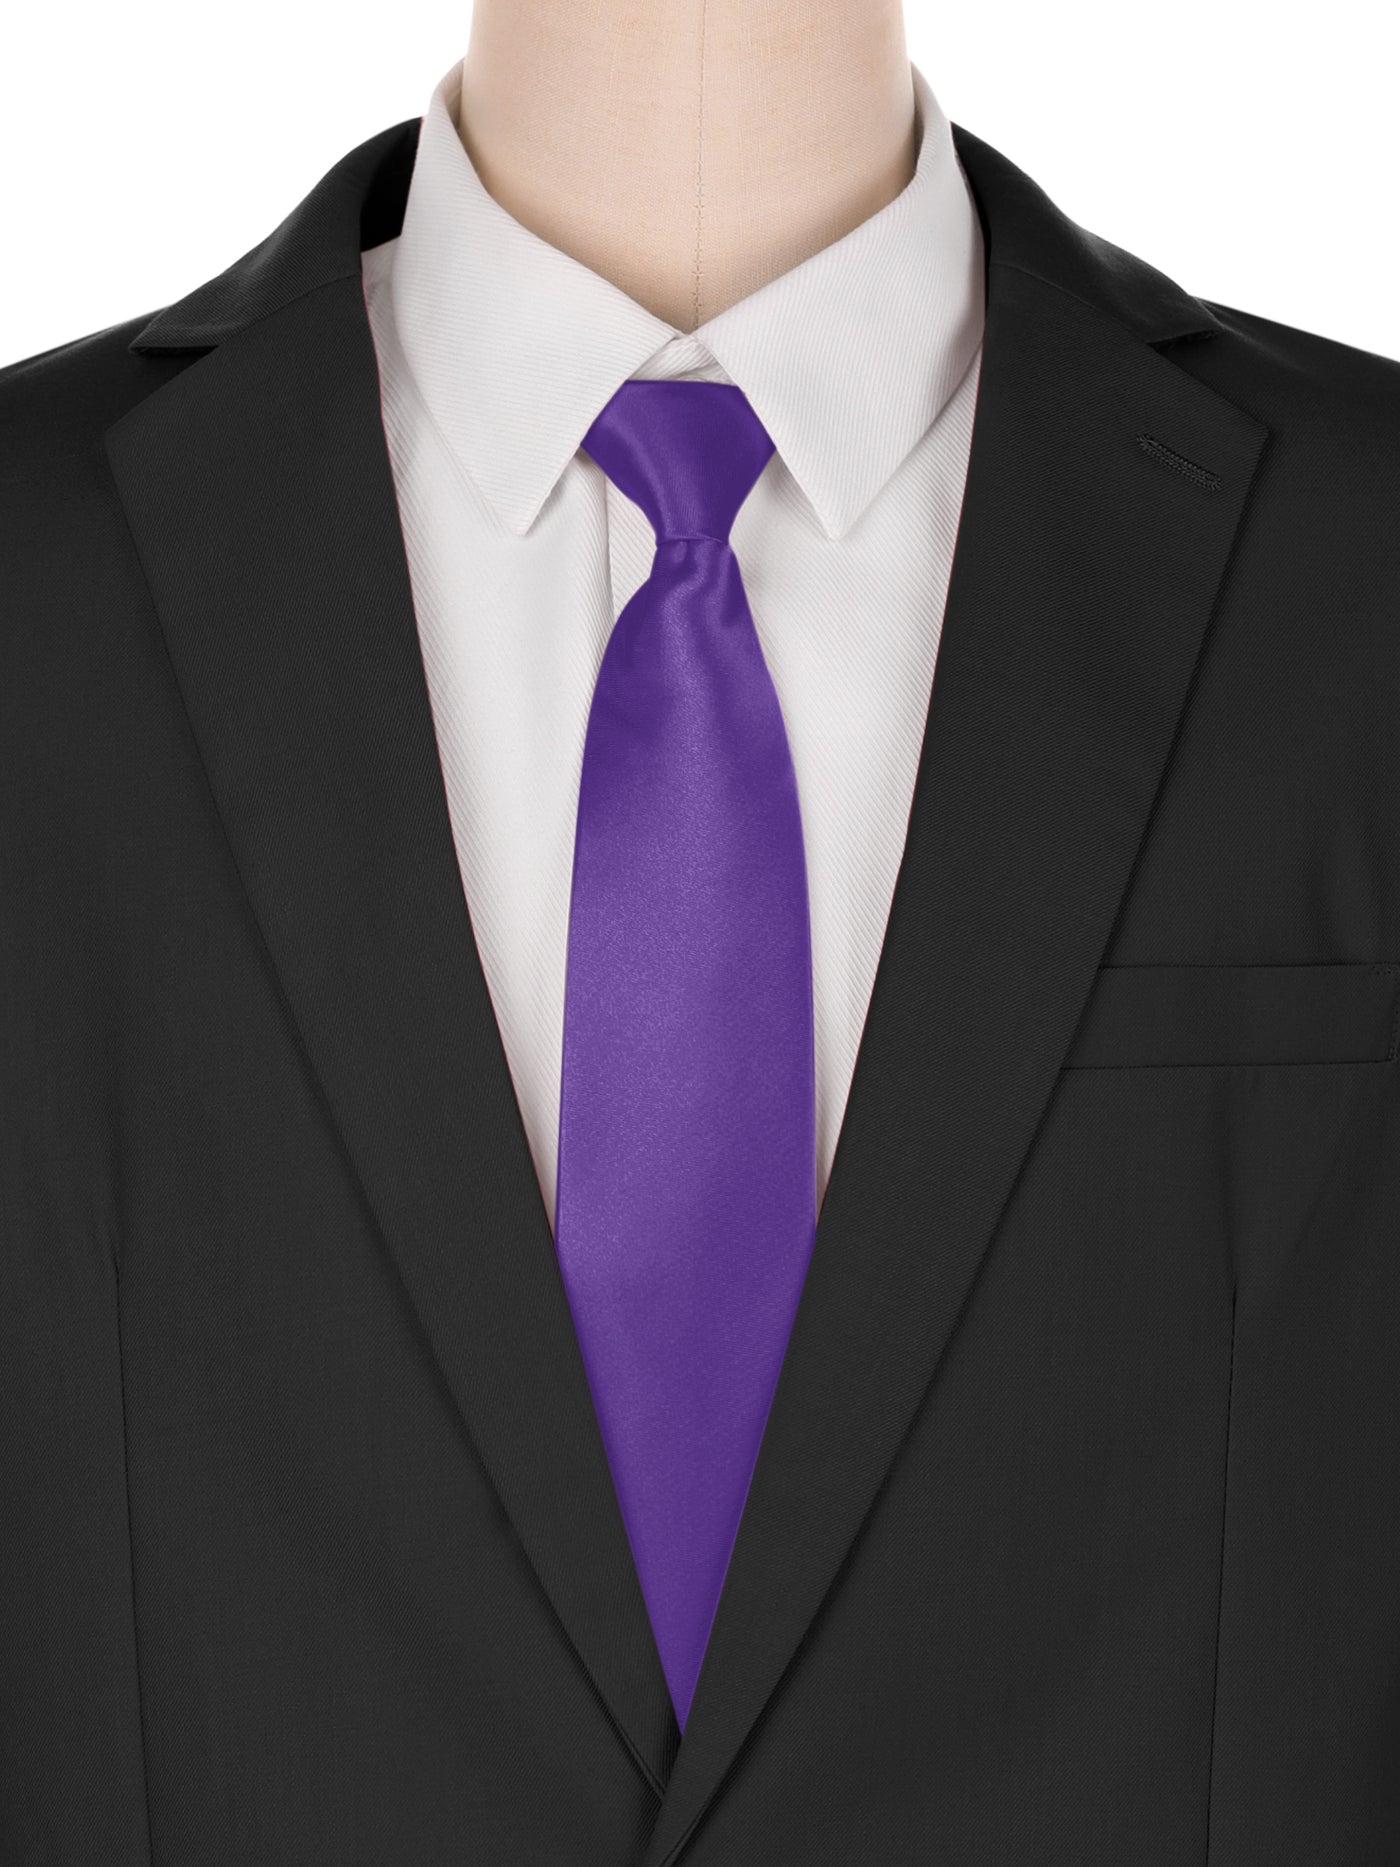 Bublédon Solid Color Tie, Satin Shine Pretied Knot, Zipper Ties for Men Formal Casual